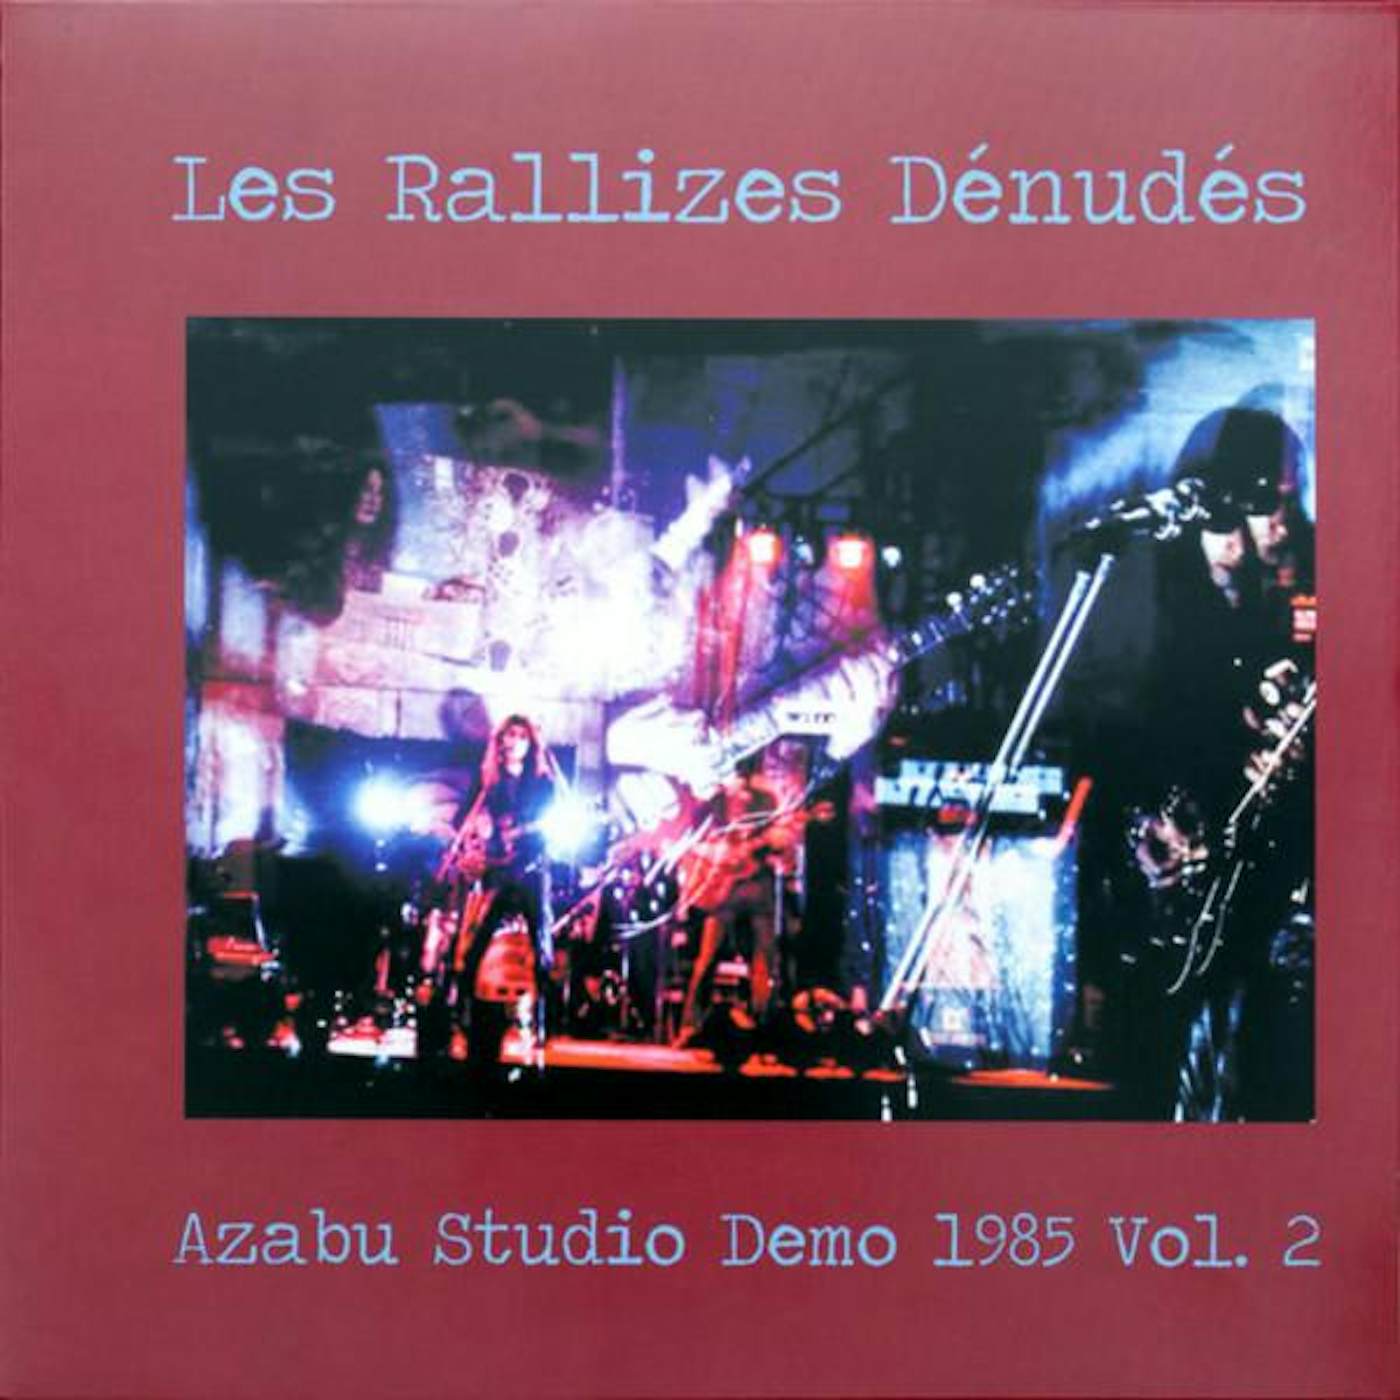 Les Rallizes Dénudés AZABU STUDIO DEMO 1985: VOL. 2 Vinyl Record